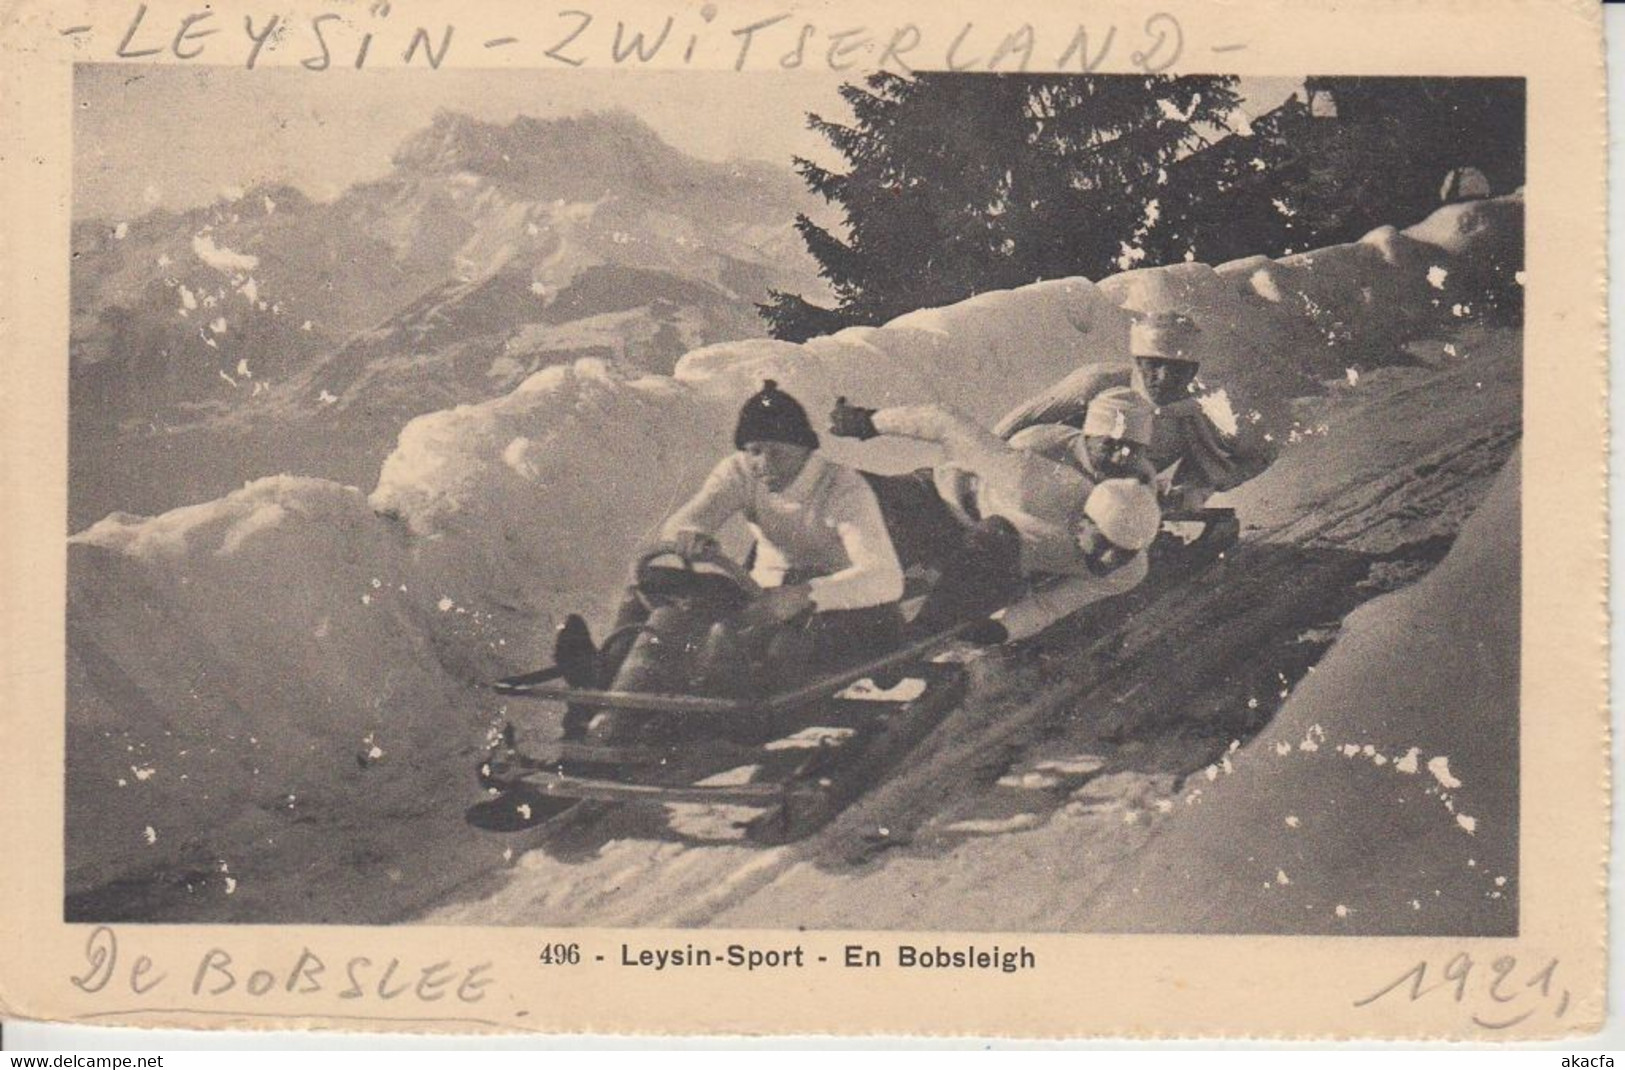 WINTERSPORT CLIMBING 29 Vintage Postcards pre-1940 (L2551)